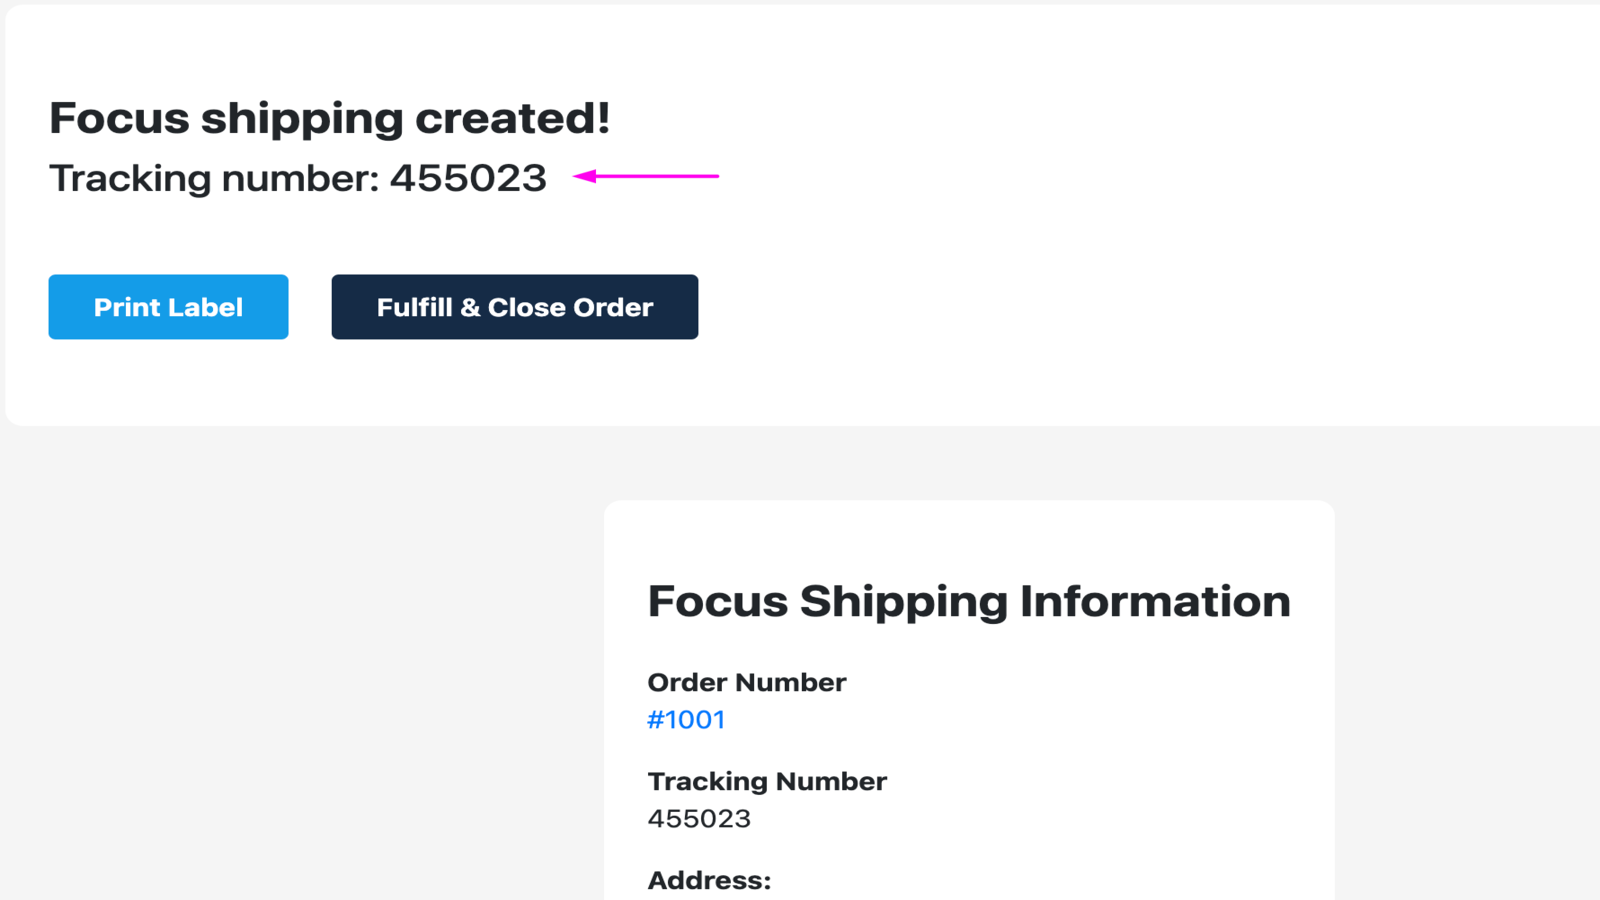 Get Focus shipments tracking number information